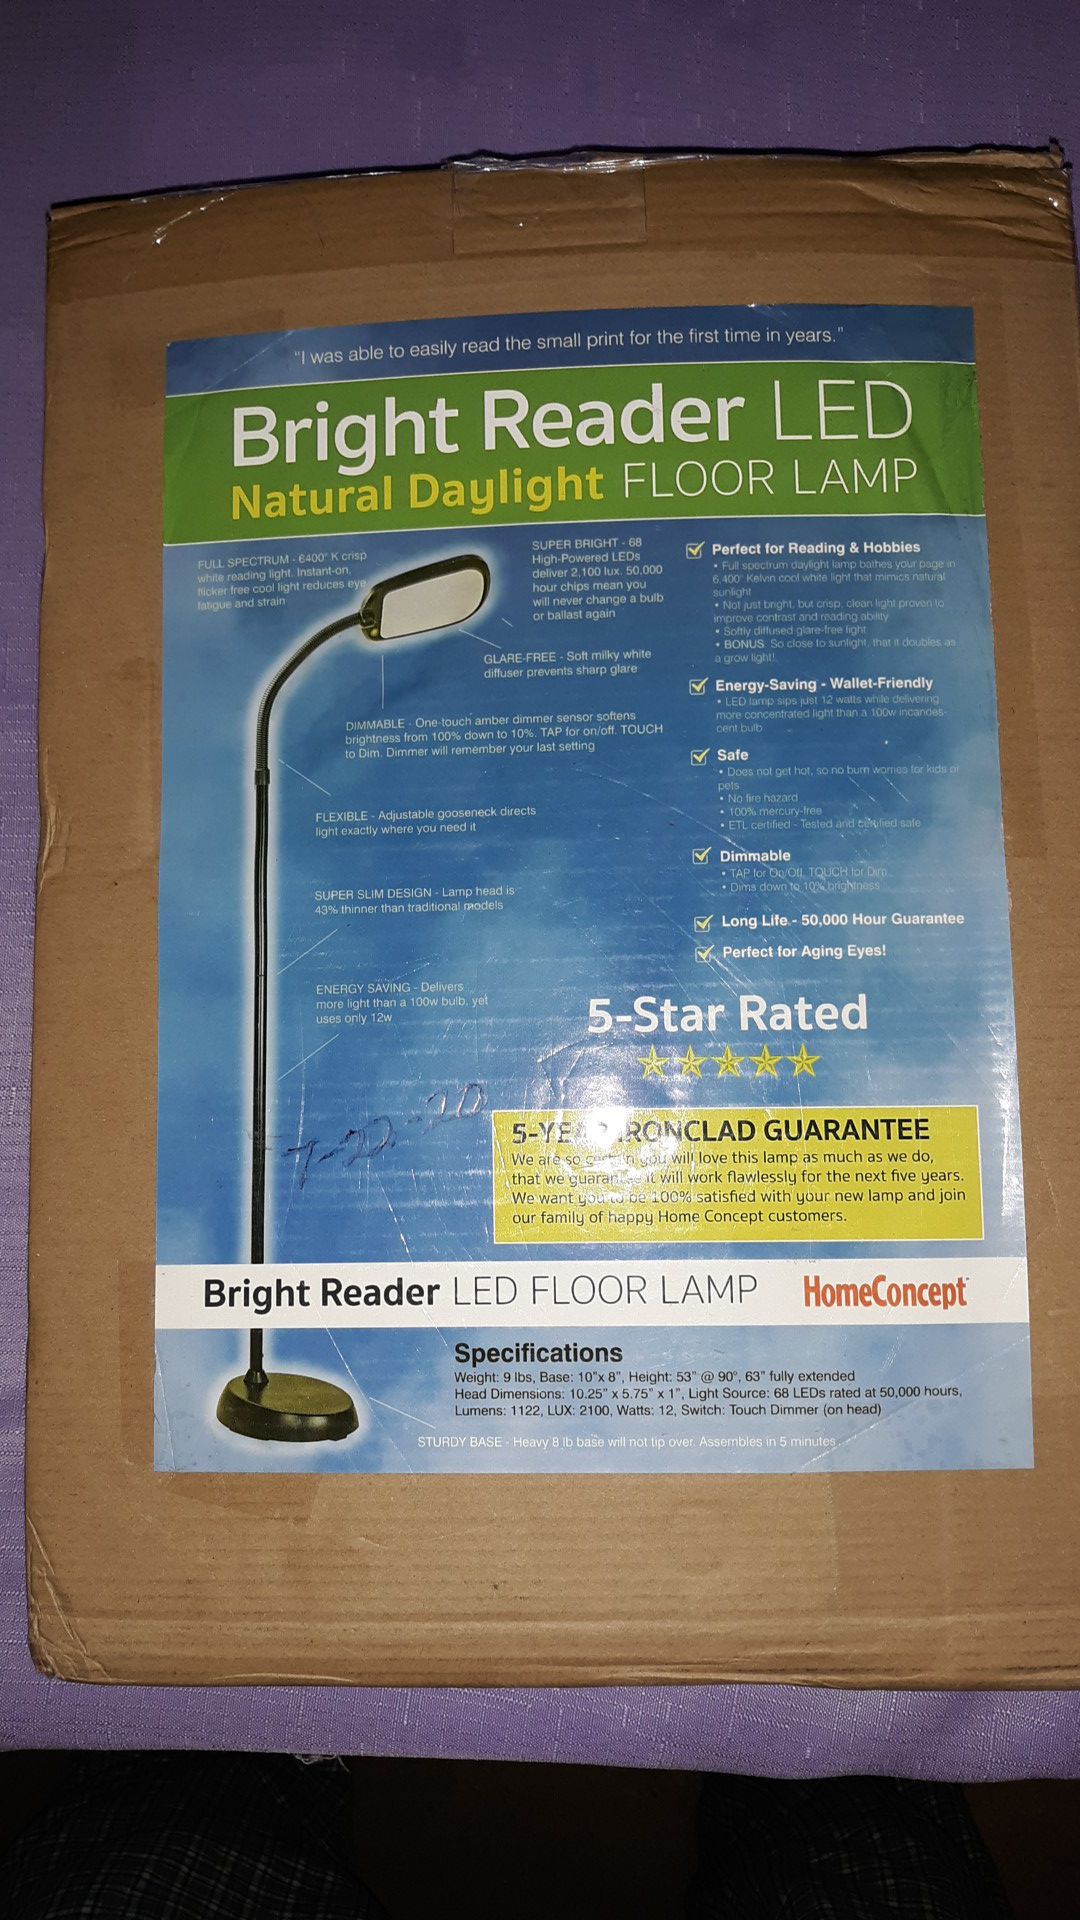 Bright Reader LED Floor Lamp Item #LED101GY